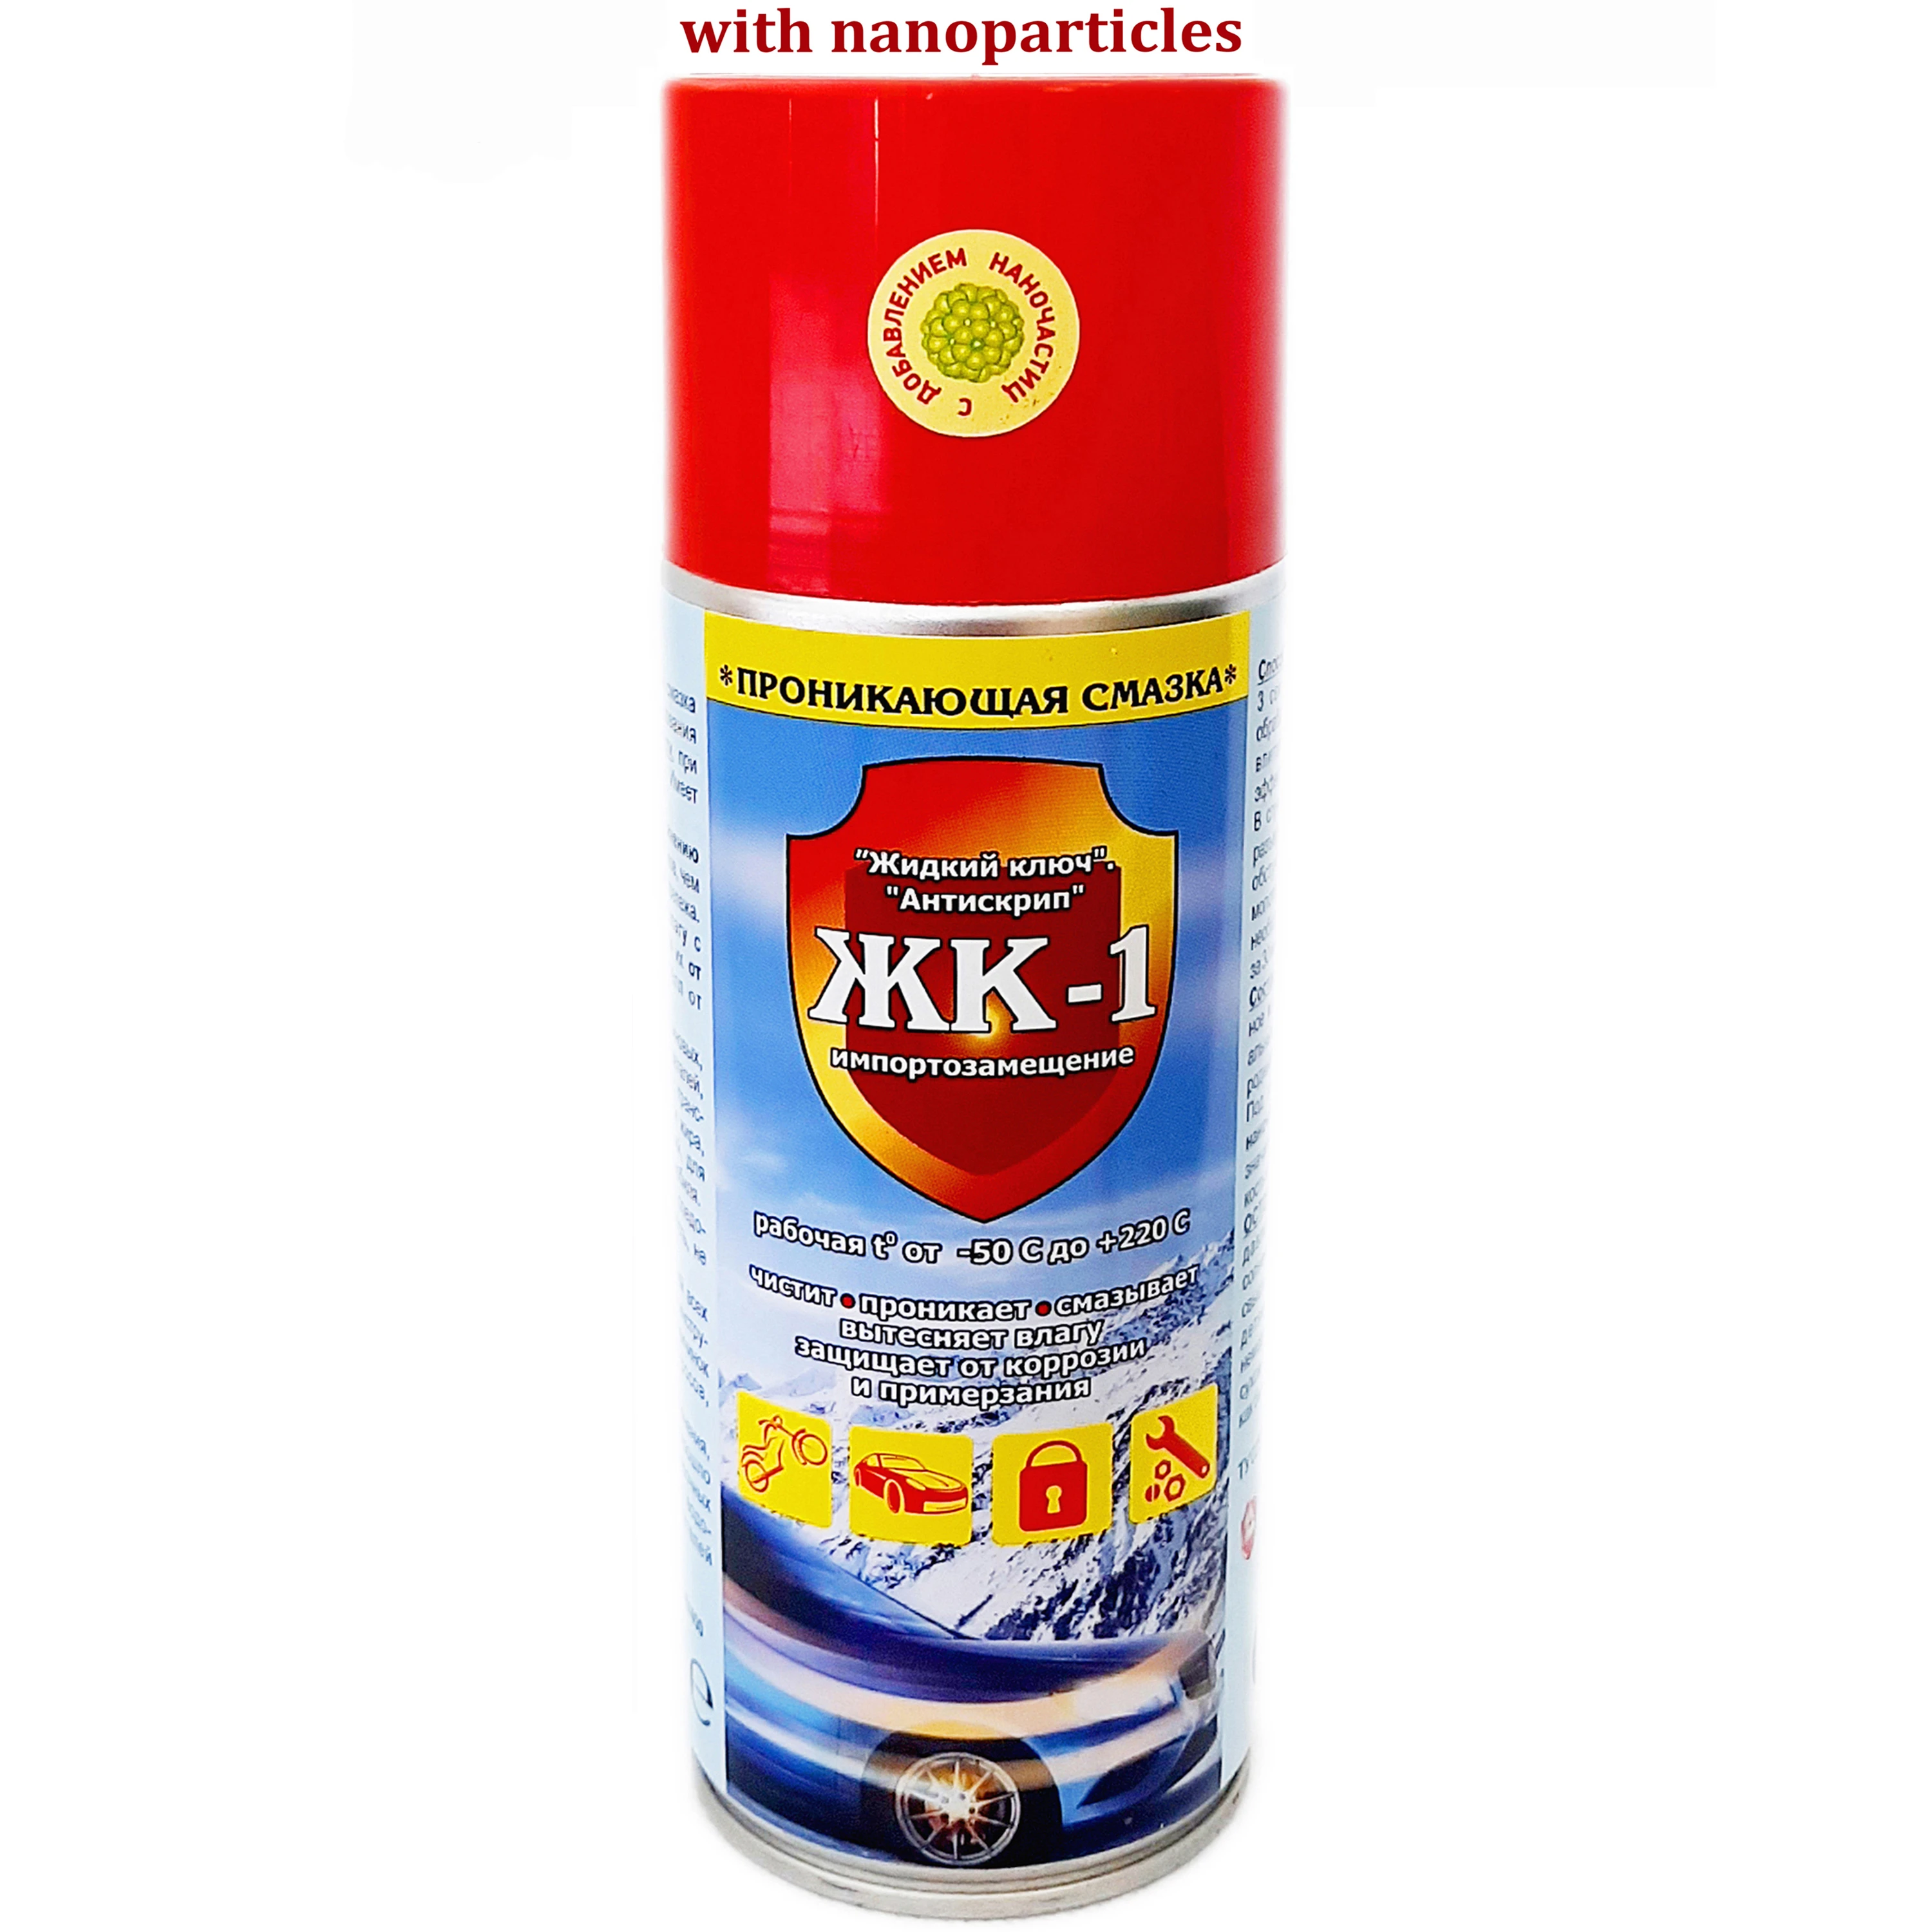 LK-1 liquid key 520 ml with nanoparticles anti-creak water-dispersion penetrating lubricant